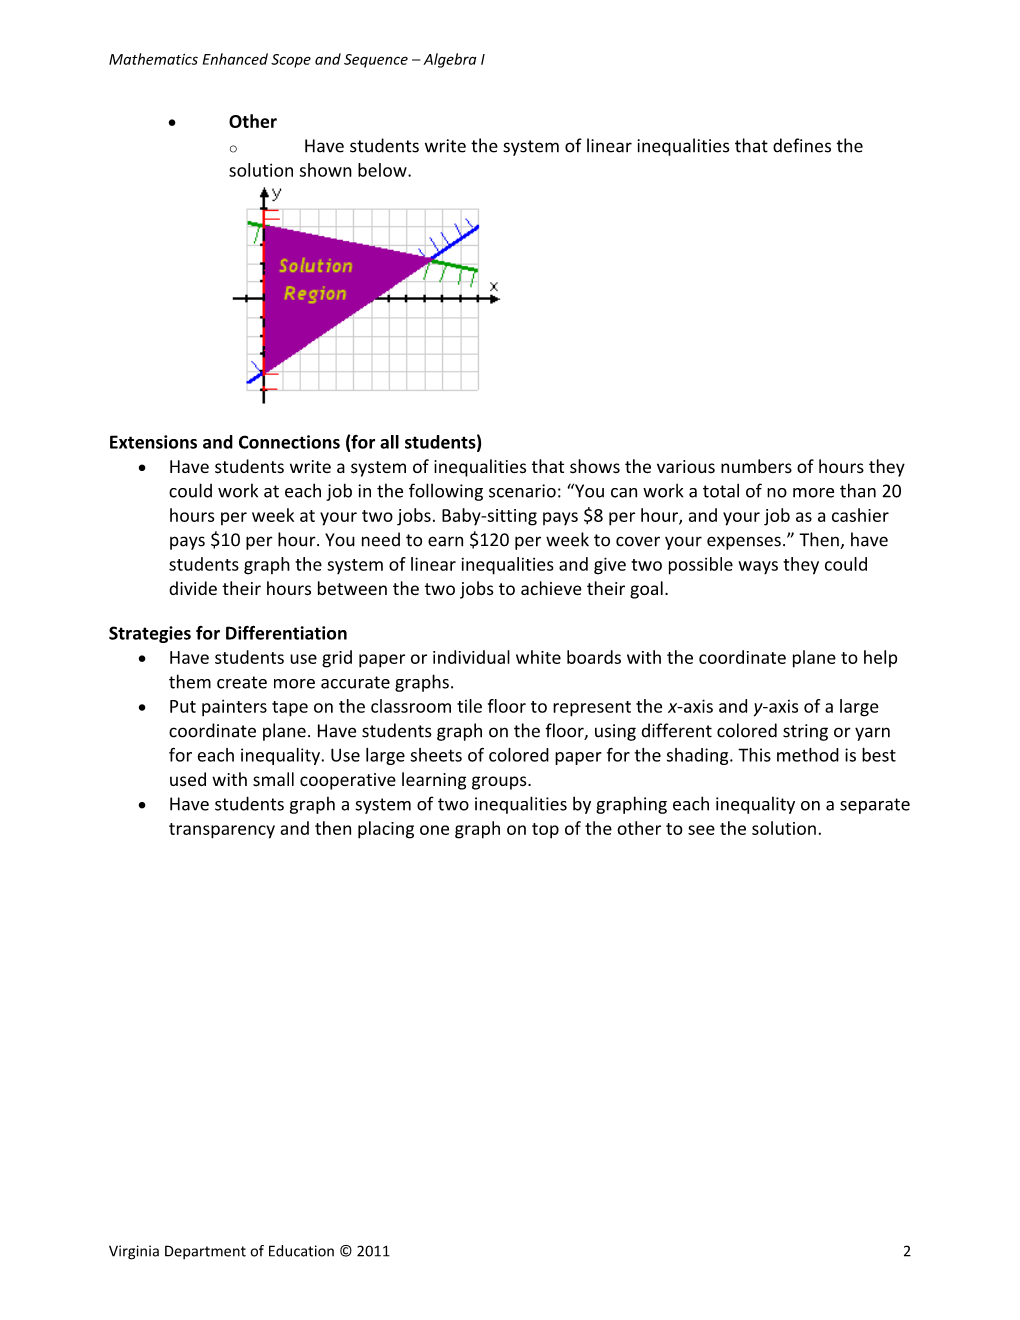 Mathematics Enhanced Scope and Sequence Algebra I s1